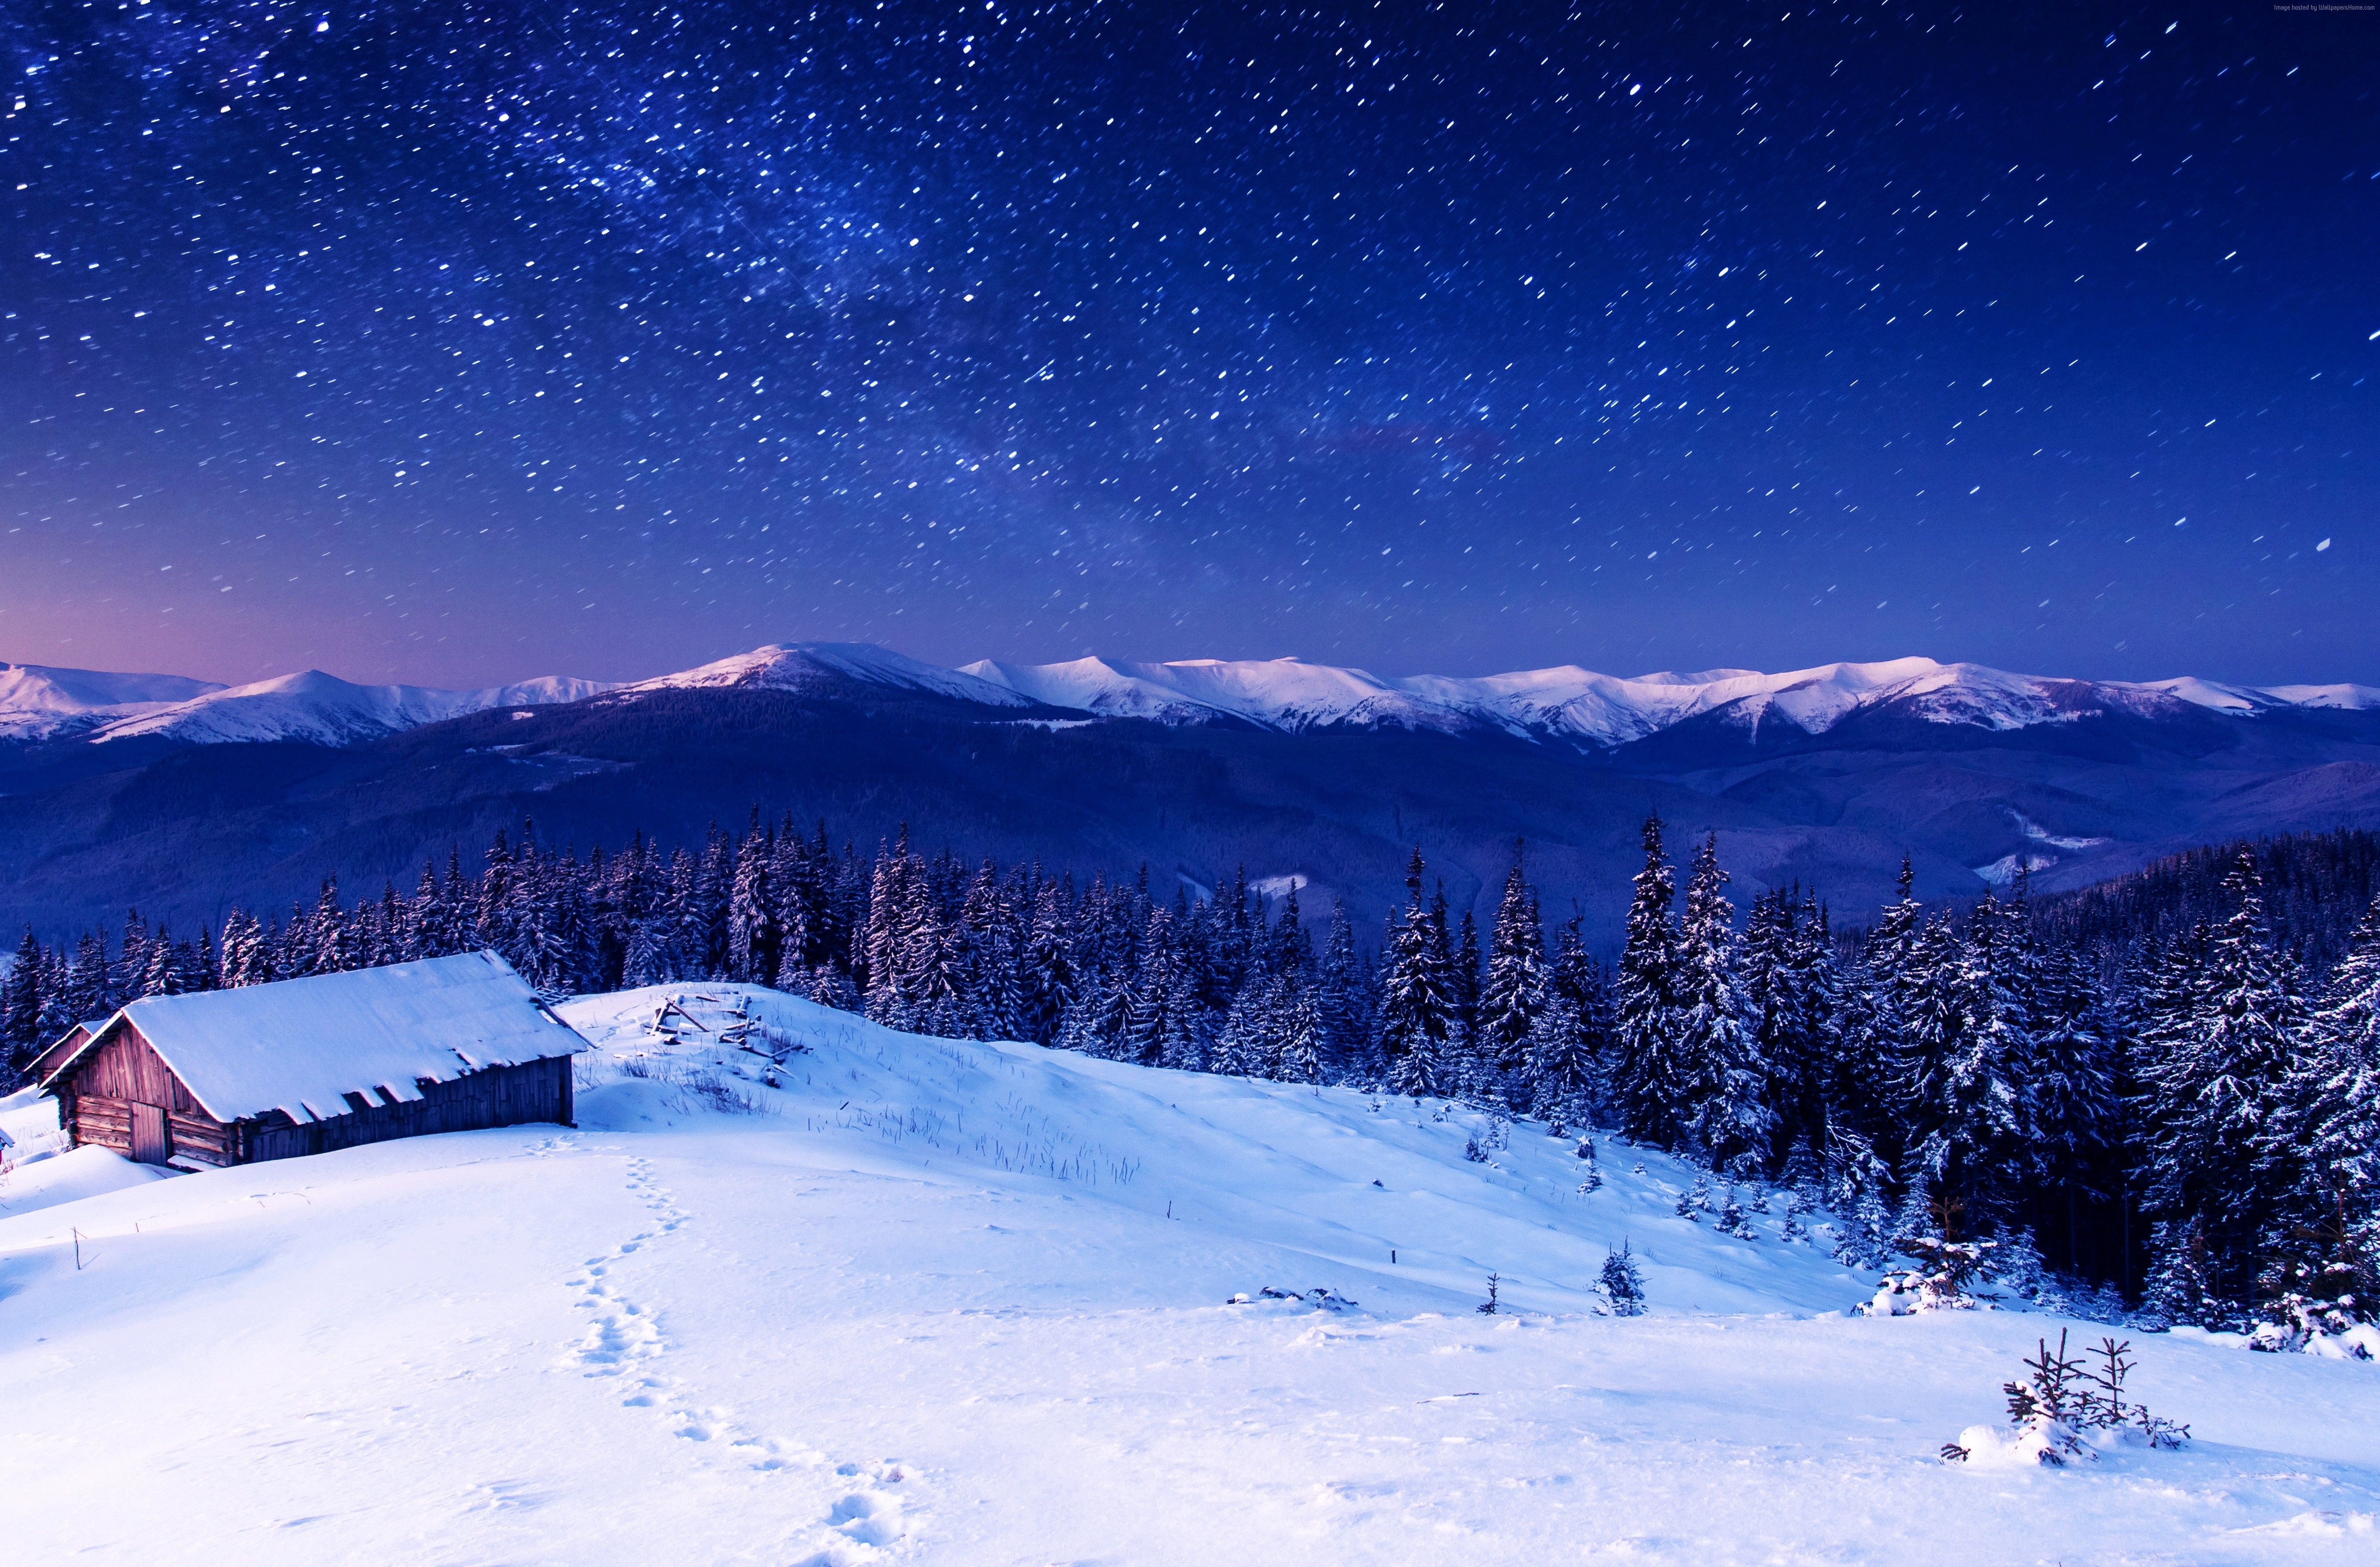 1000 Free Night Snow  Snow Images  Pixabay